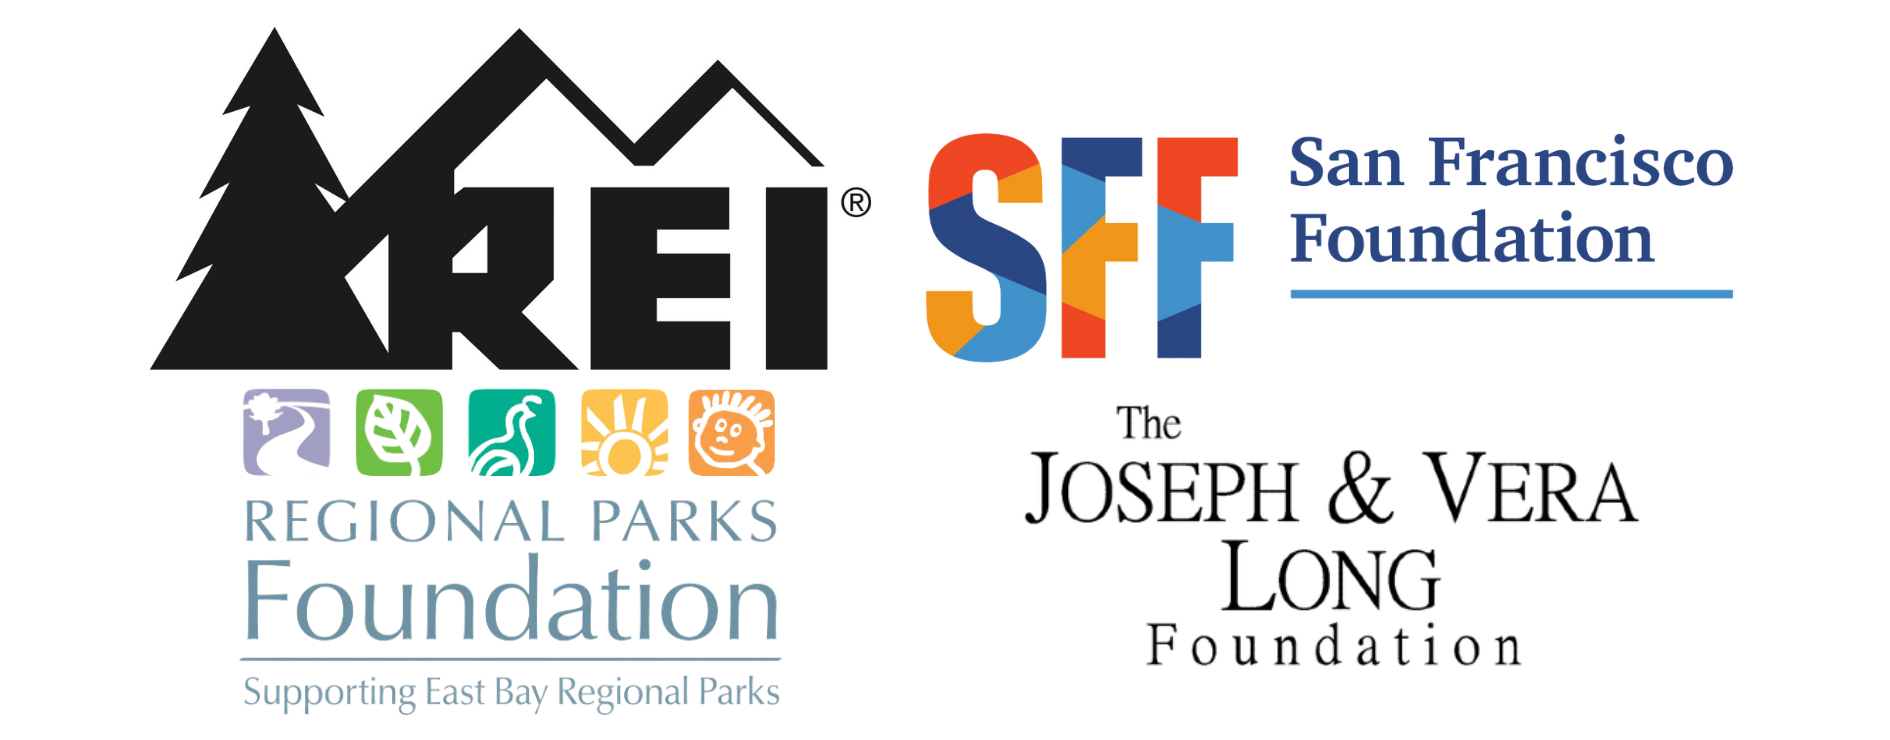 Partner Logos: REI Foundation, San Francisco Foundation, Regional Parks Foundation, The Joseph and Vera Long Foundation